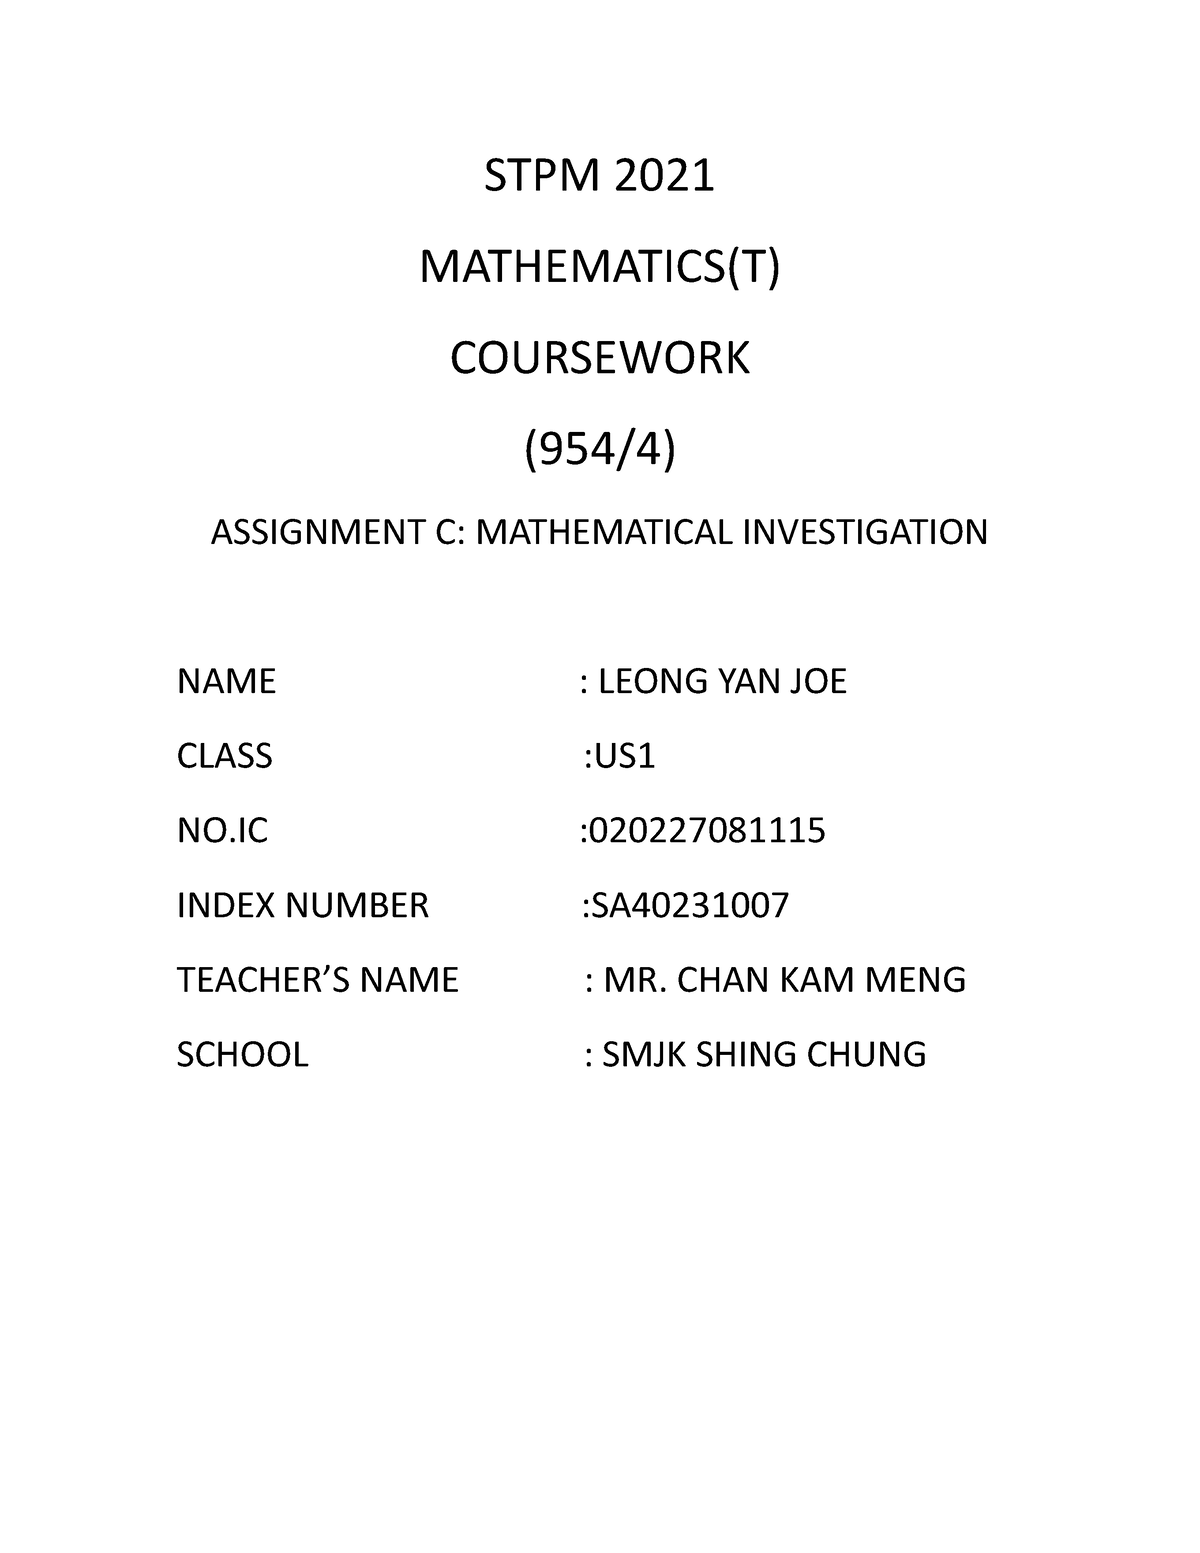 mathematics t coursework stpm 2021